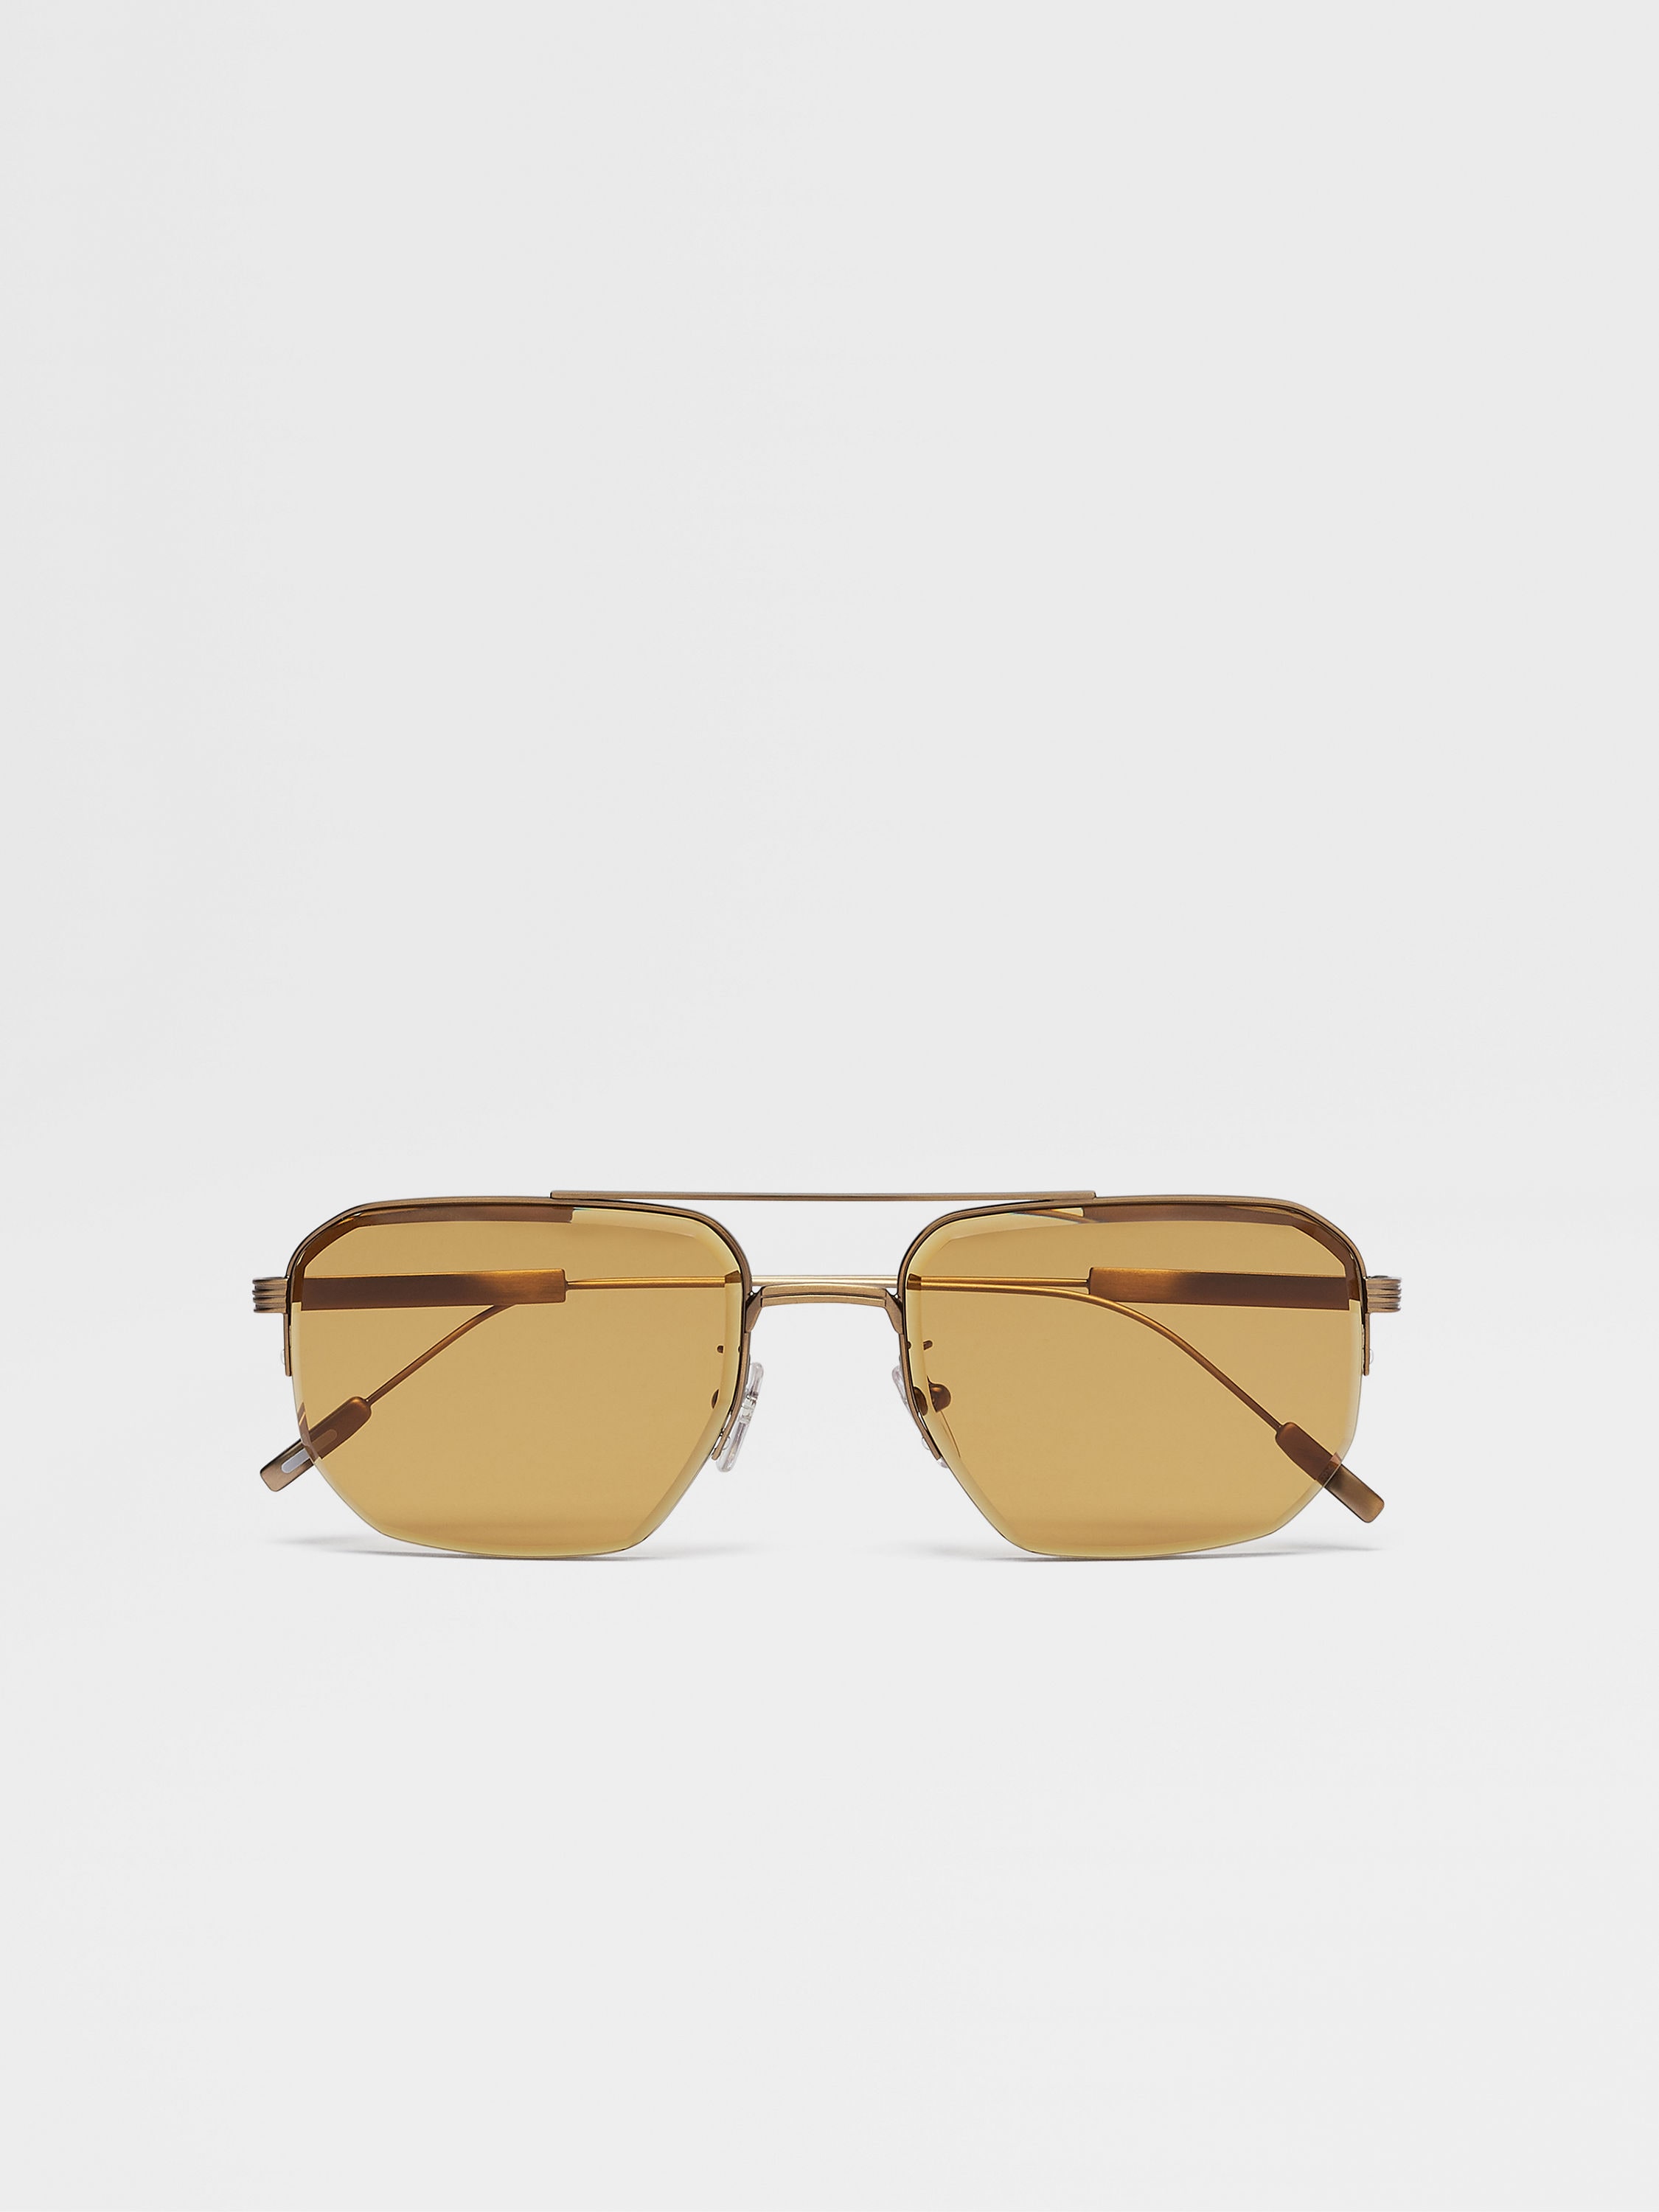 Antiqued Brass Metal Sunglasses